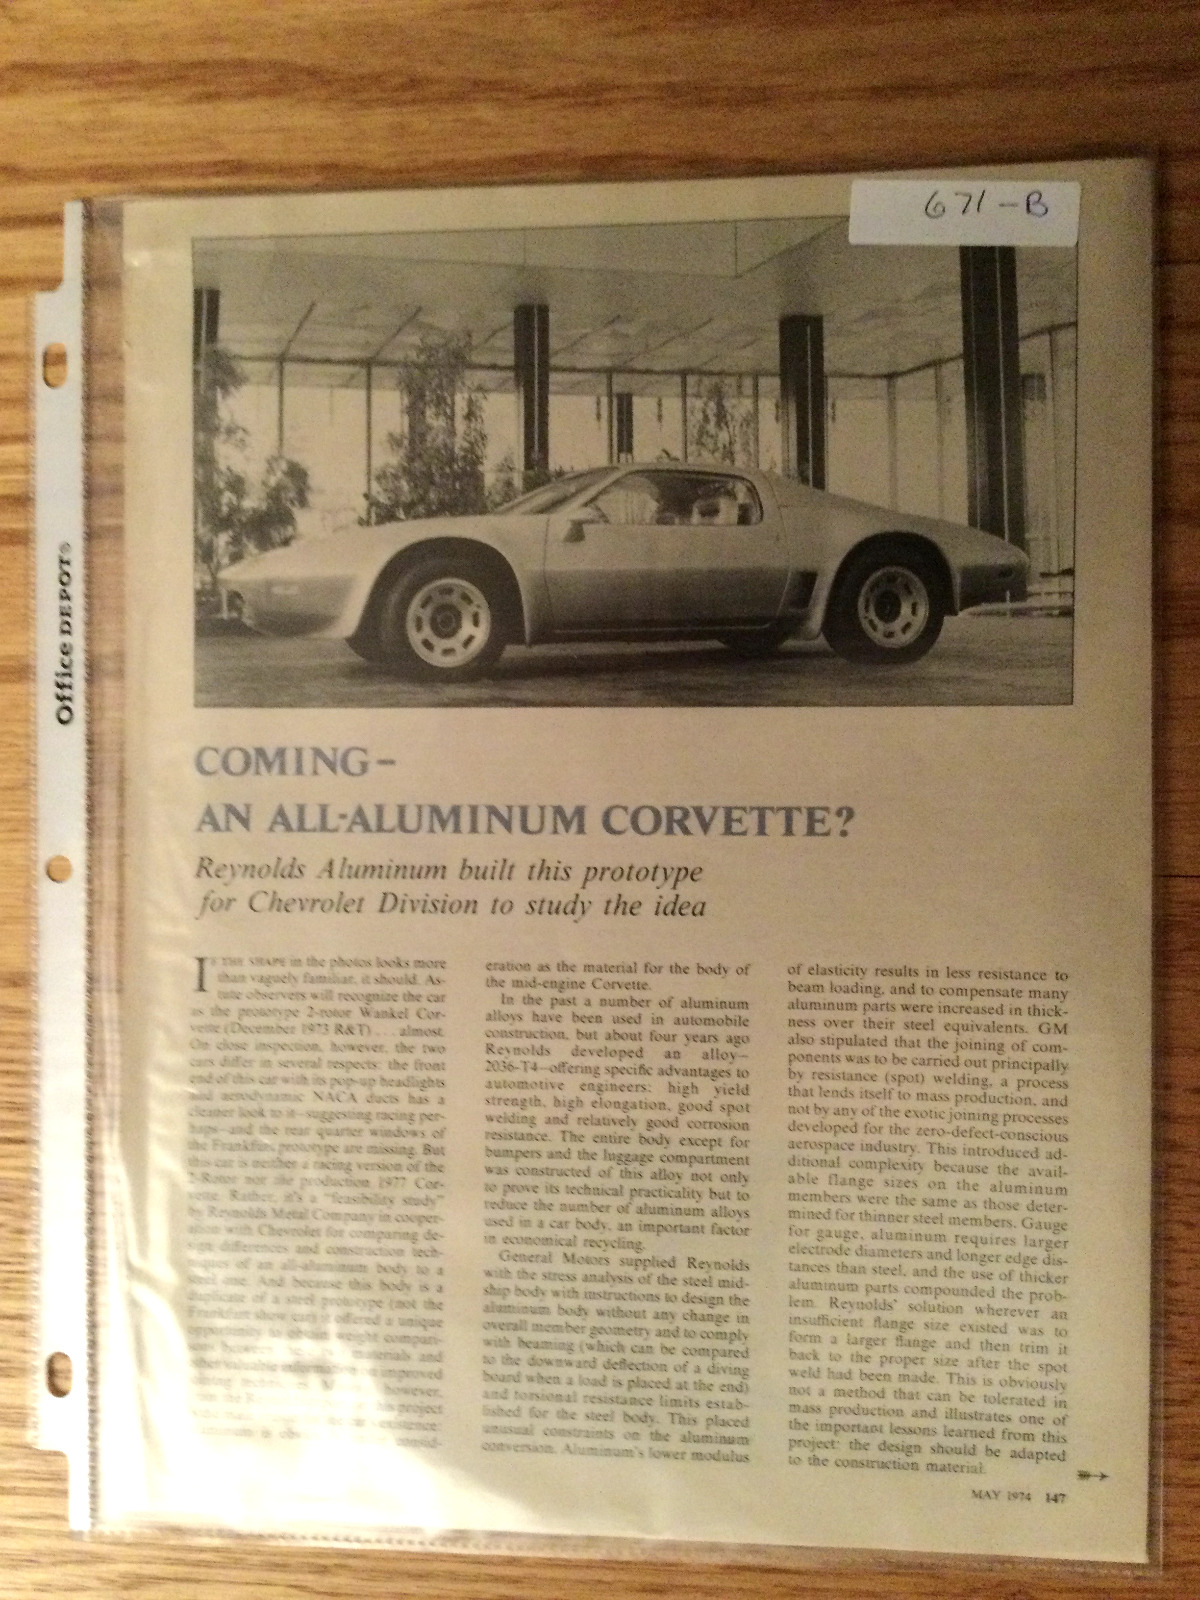 MISC671B Article Corvette Coming An All Aluminum Corvette?? Prototype 5/1974 2pg